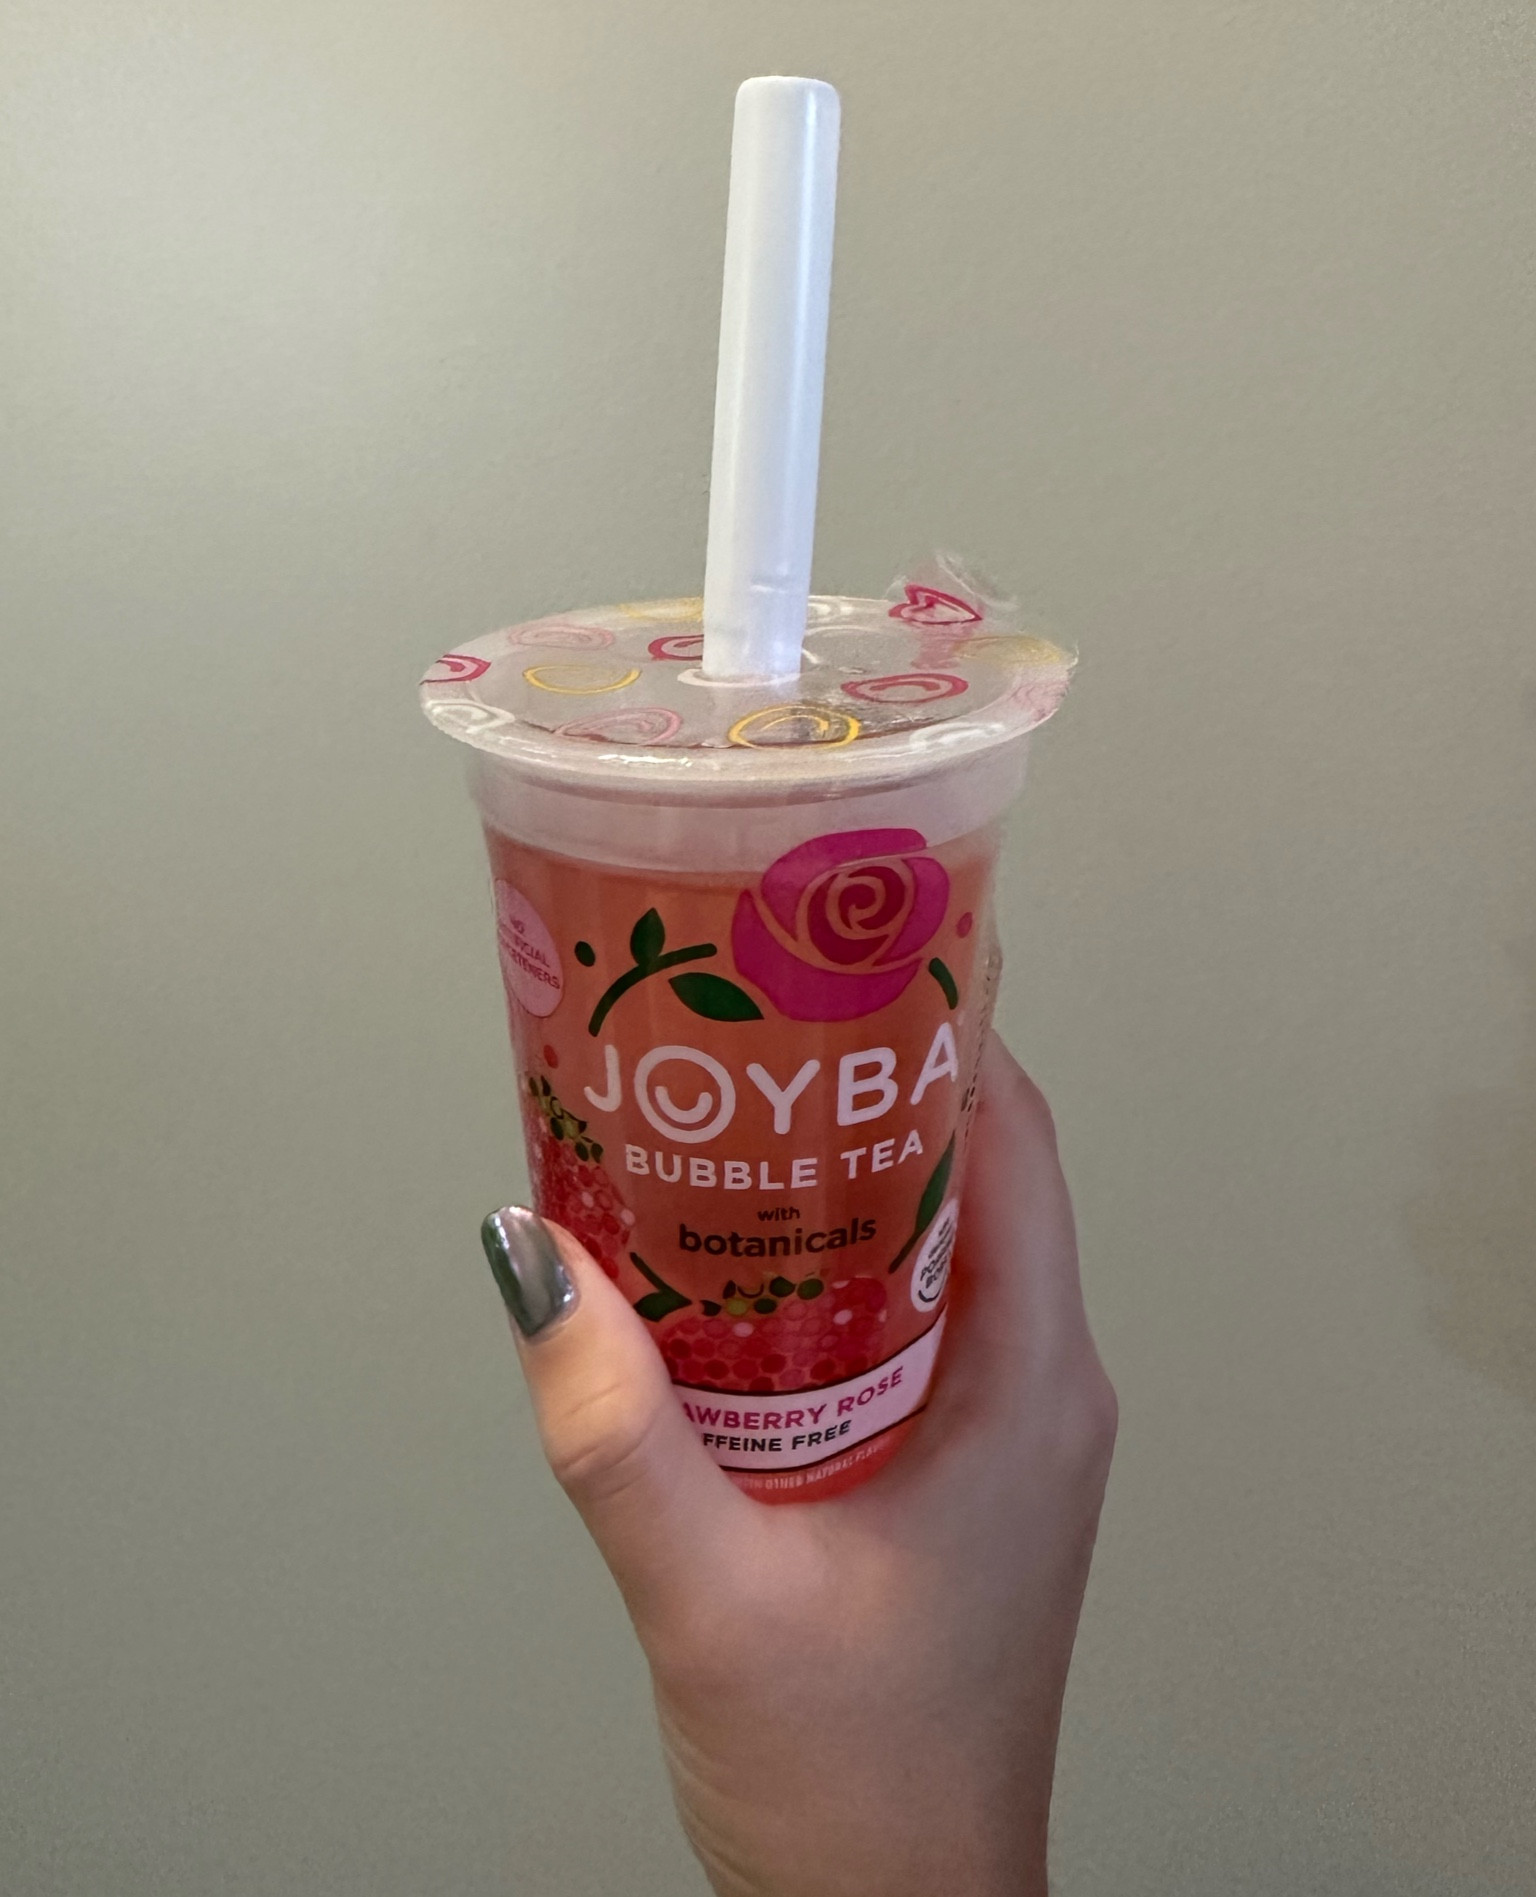 Joyba Raspberry Dragon Fruit Black Bubble Tea - 4pk/12 Fl Oz Cups